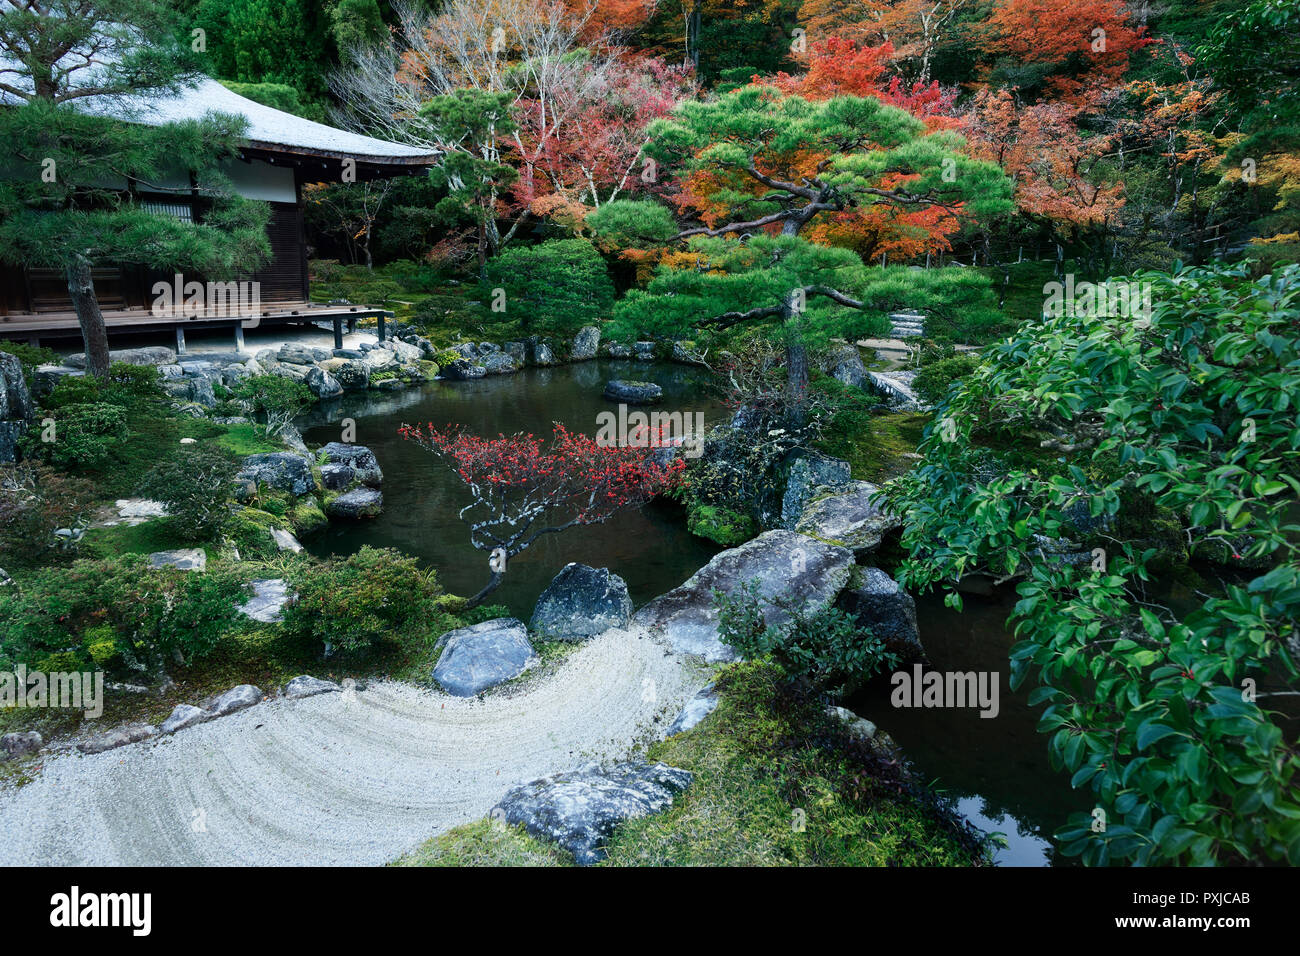 Zen garden with a pond near Kannon-den hall of Ginkaku-ji, Temple of the Silver Pavilion, in autumn scenery, Jishoji temple in Sakyo-ku, Kyoto, Japan  Stock Photo